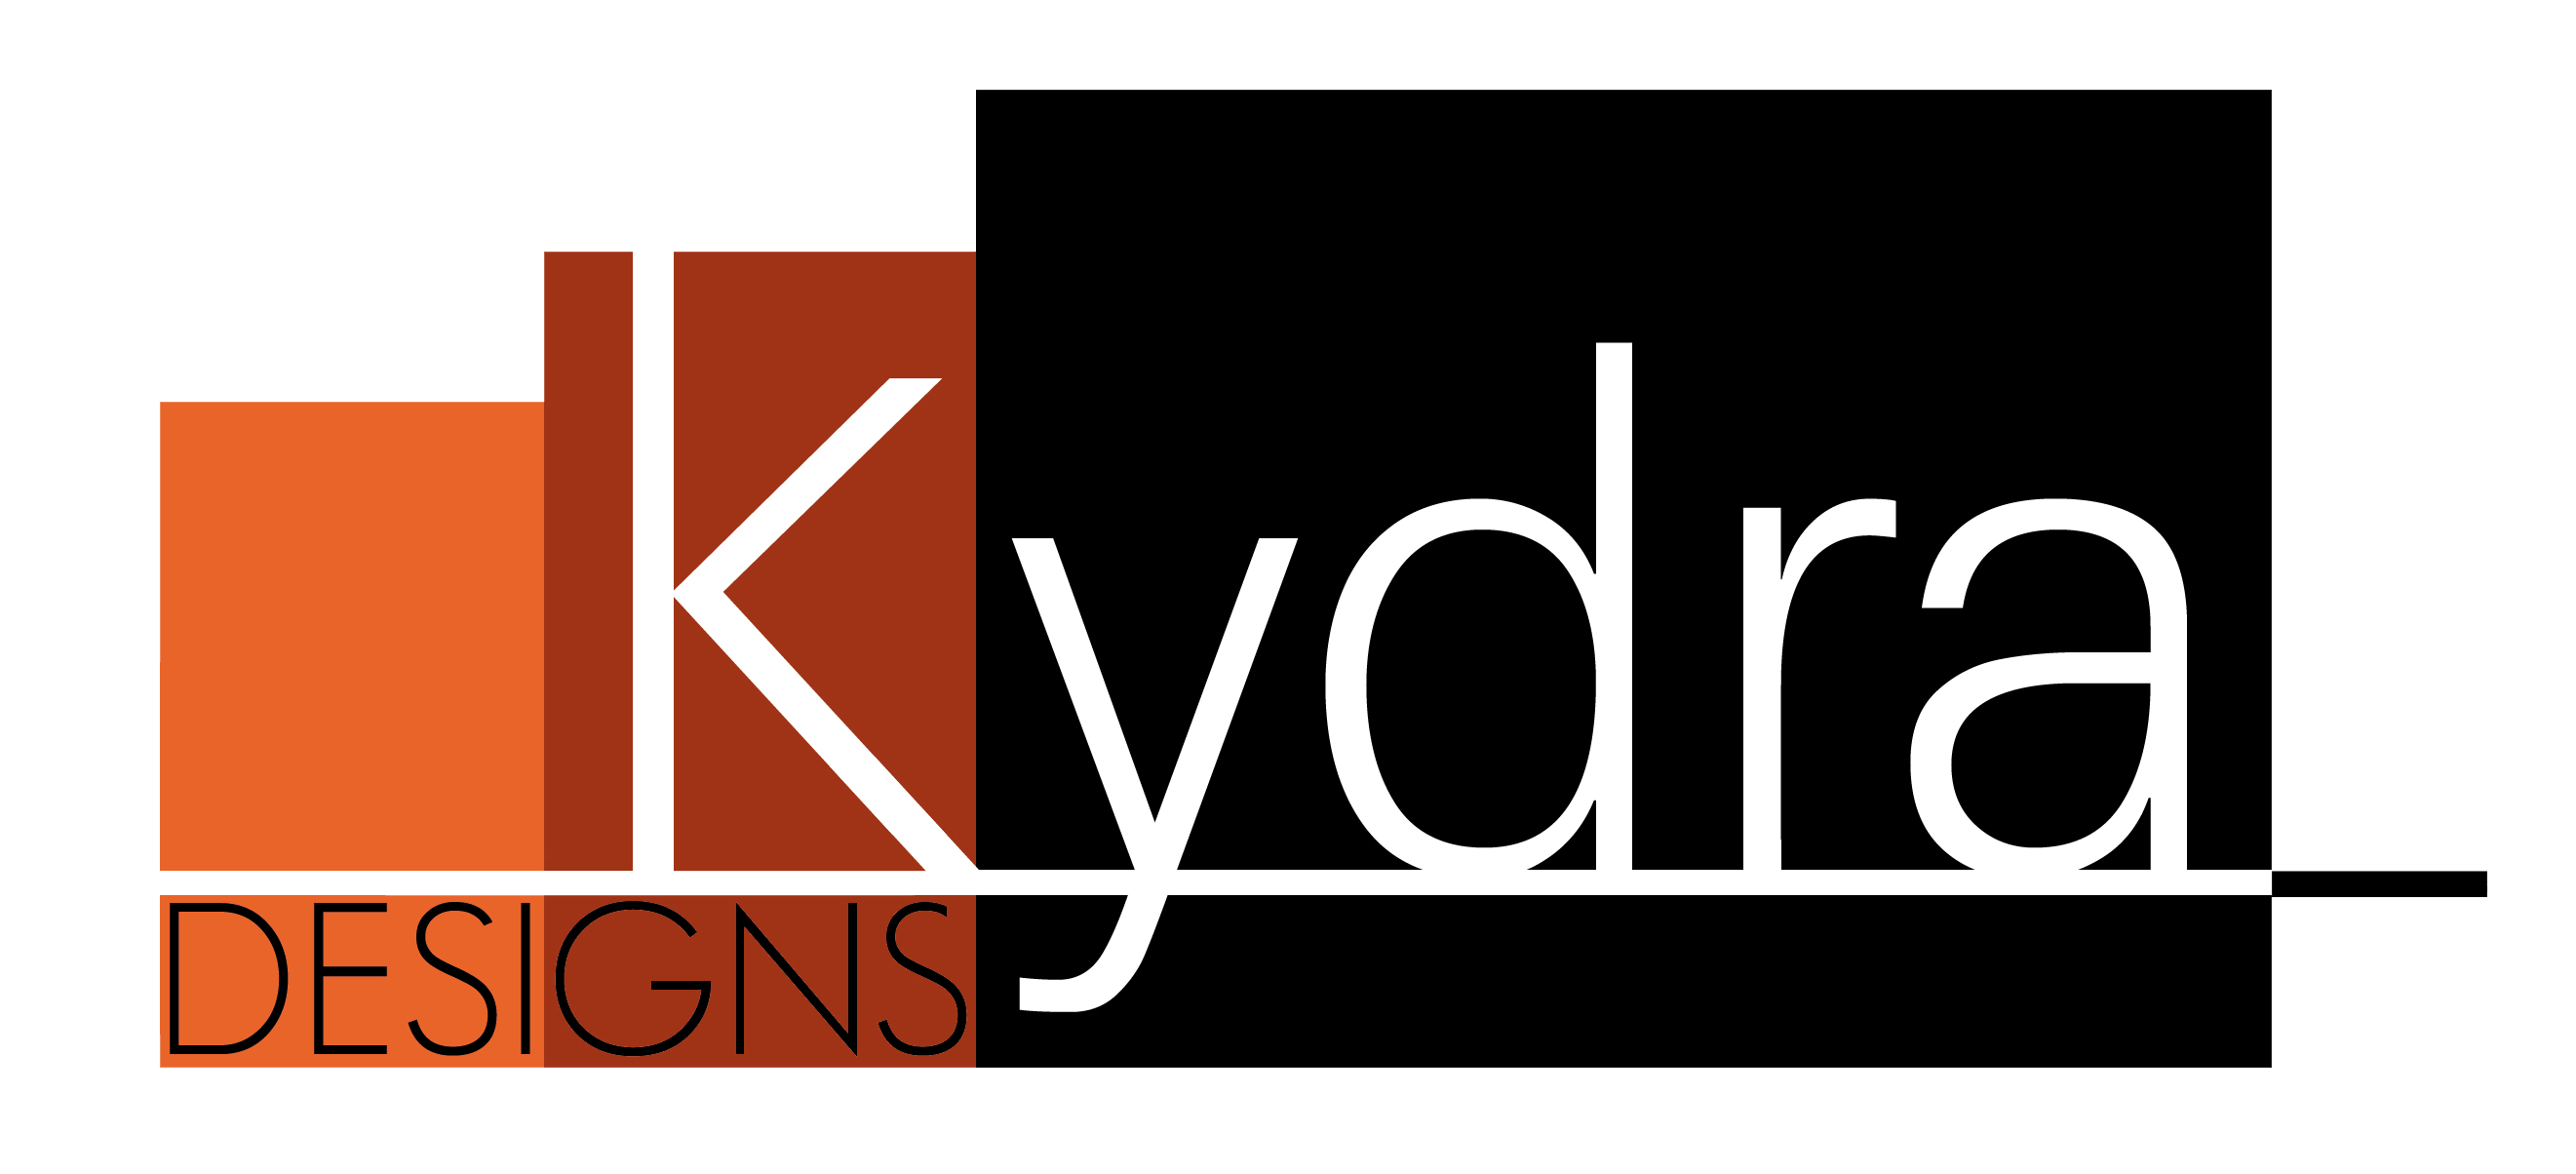 Kydra Designs Architecture